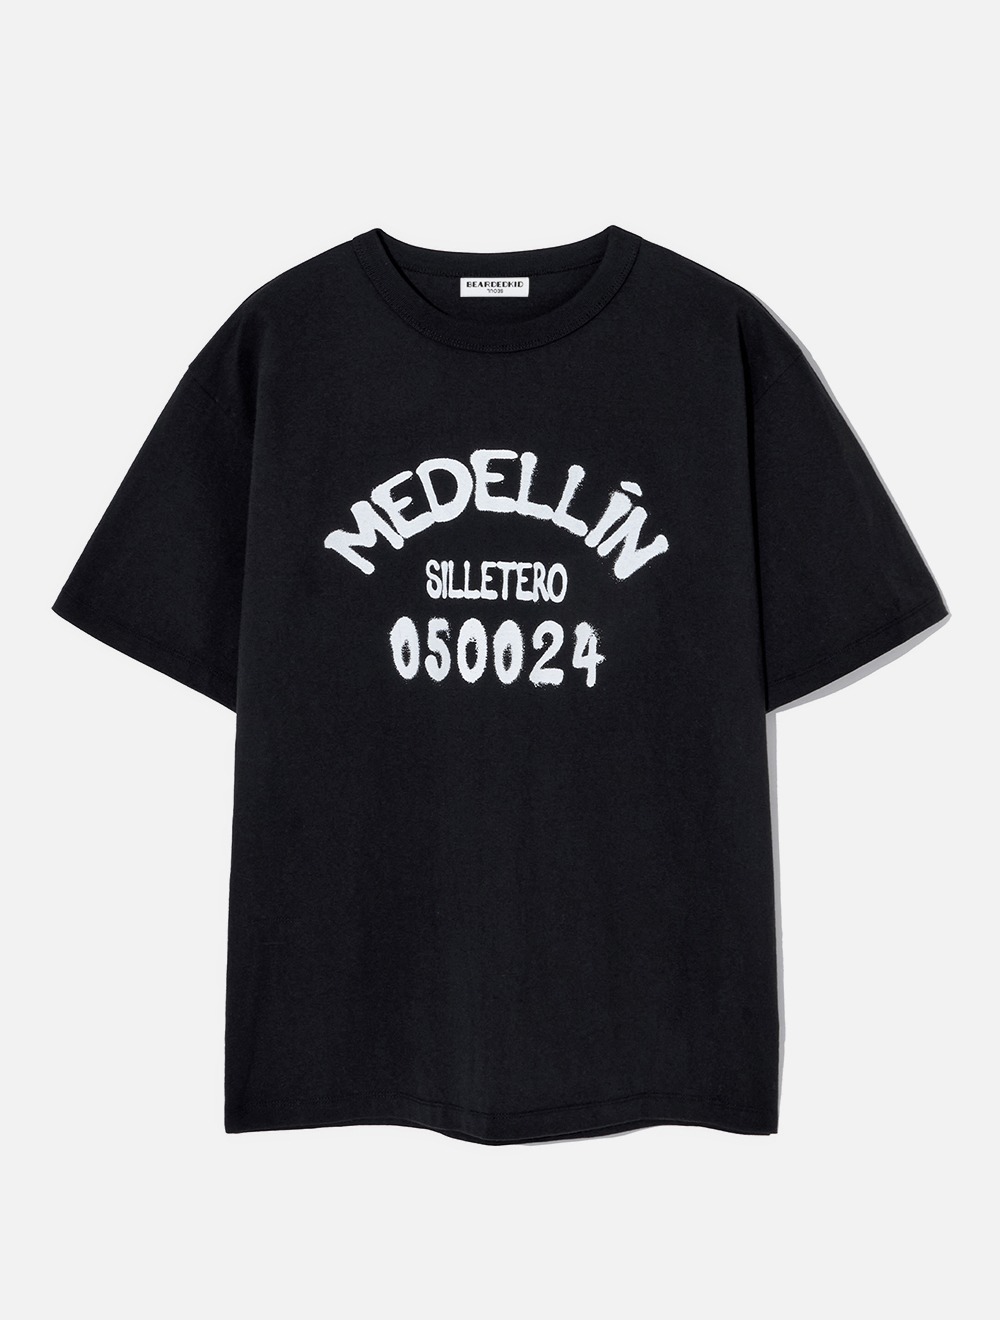 Medellin Half Sleeve T-shirt_Black